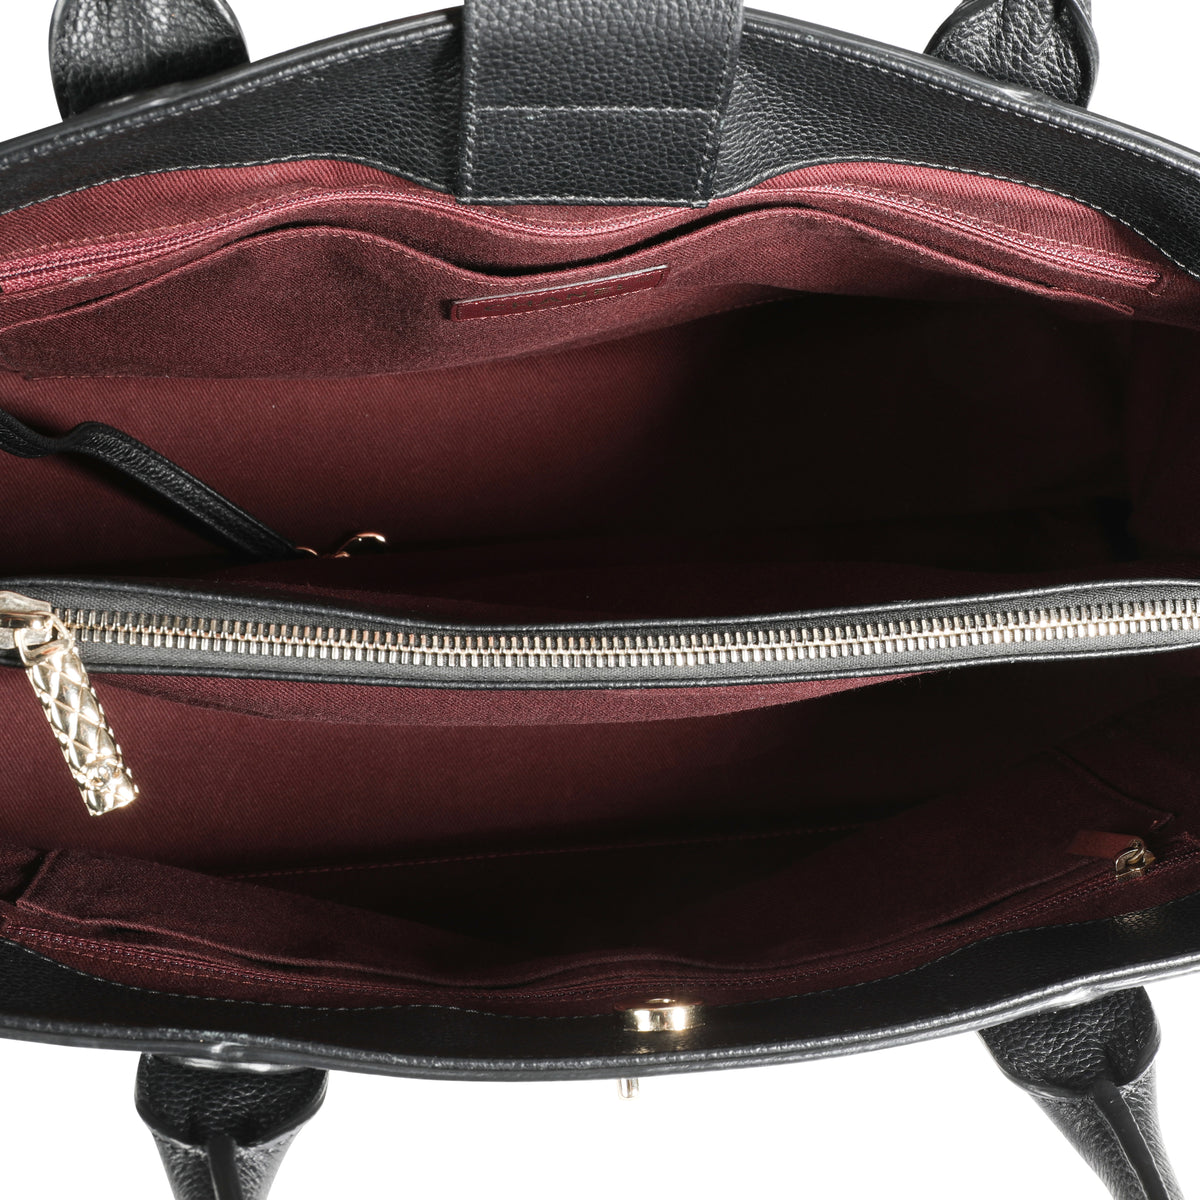 Chanel Black Calfskin Neo Executive Shopper Tote Bag w Strap